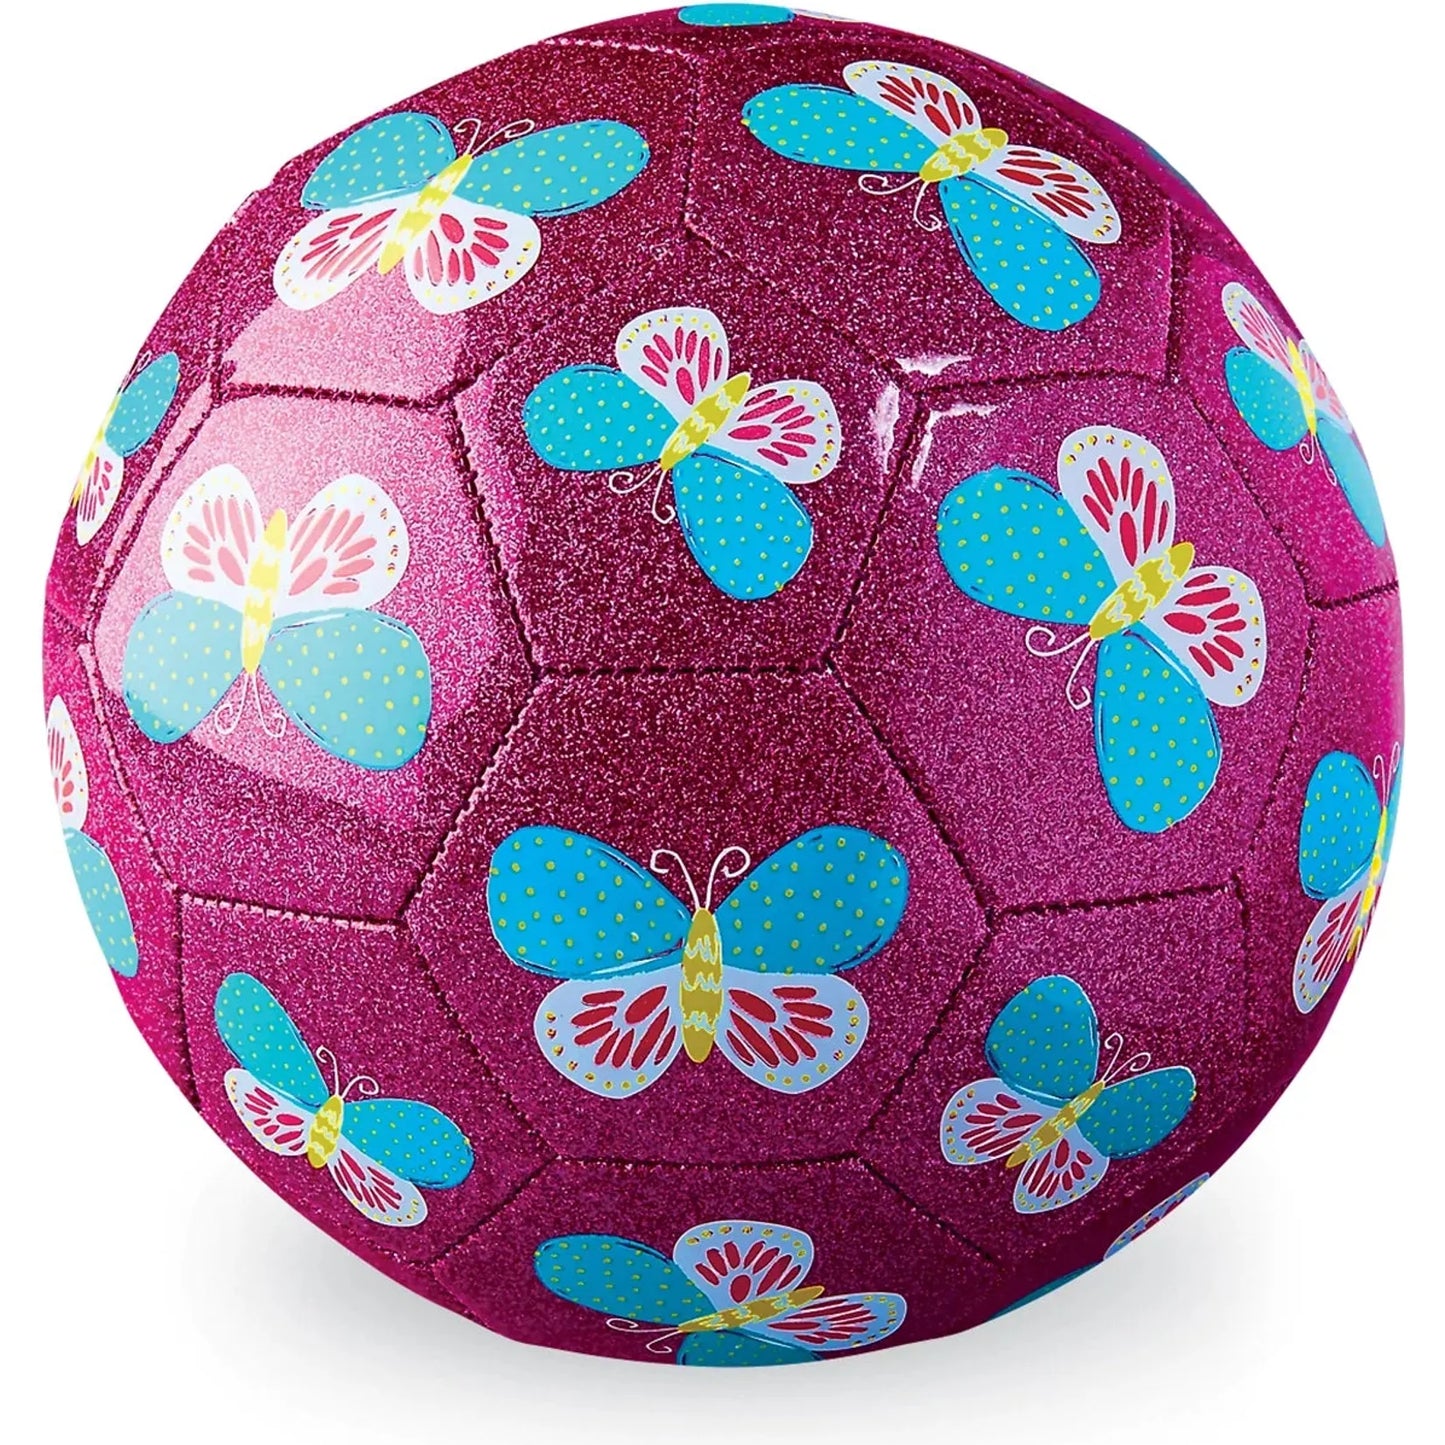 Size 2 Soccer Ball - Butterfly